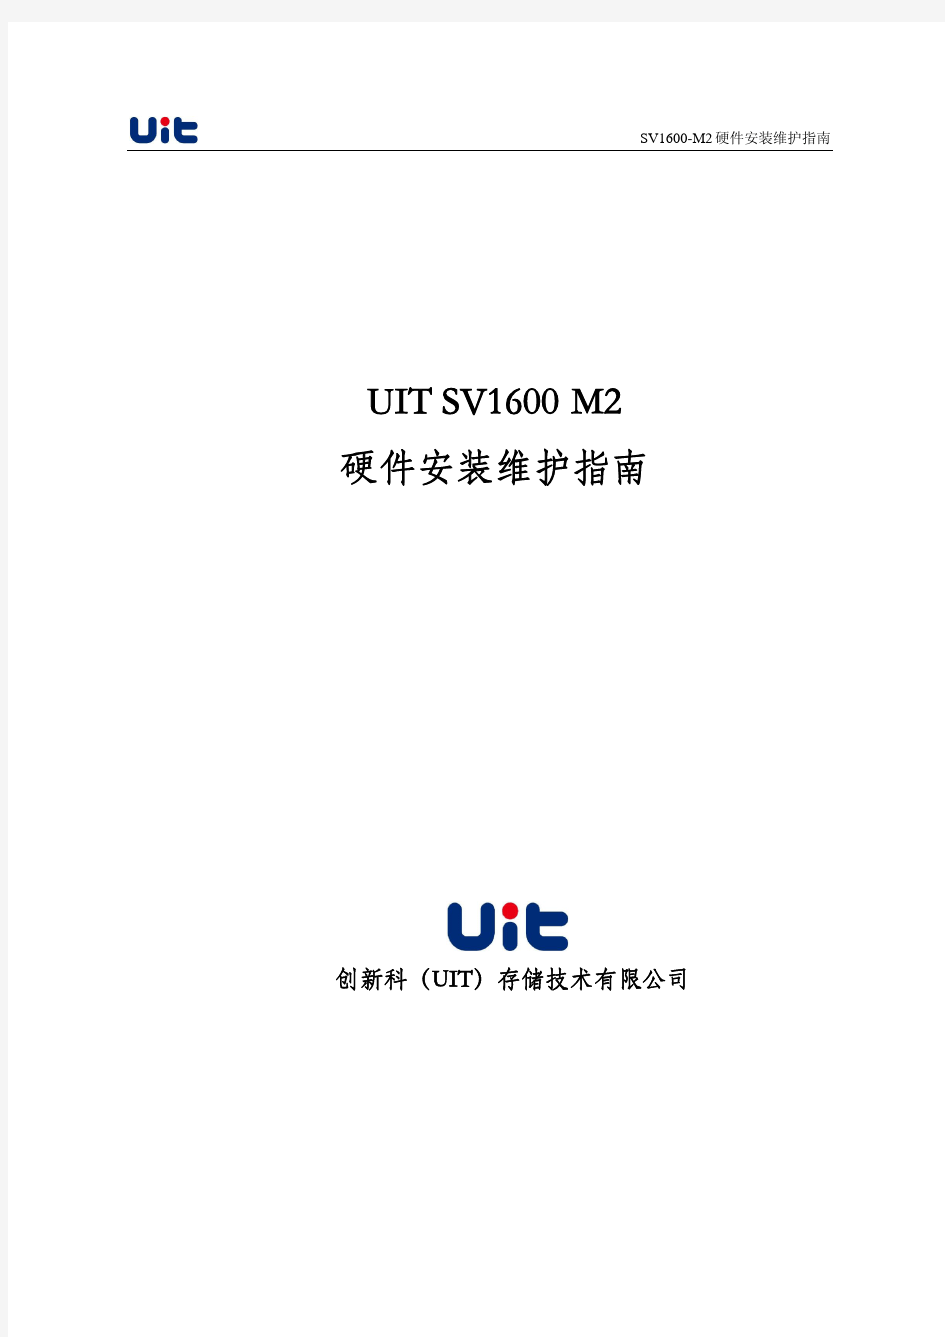 Microsoft Word - UIT SV1600-M2 硬件安装维护指南